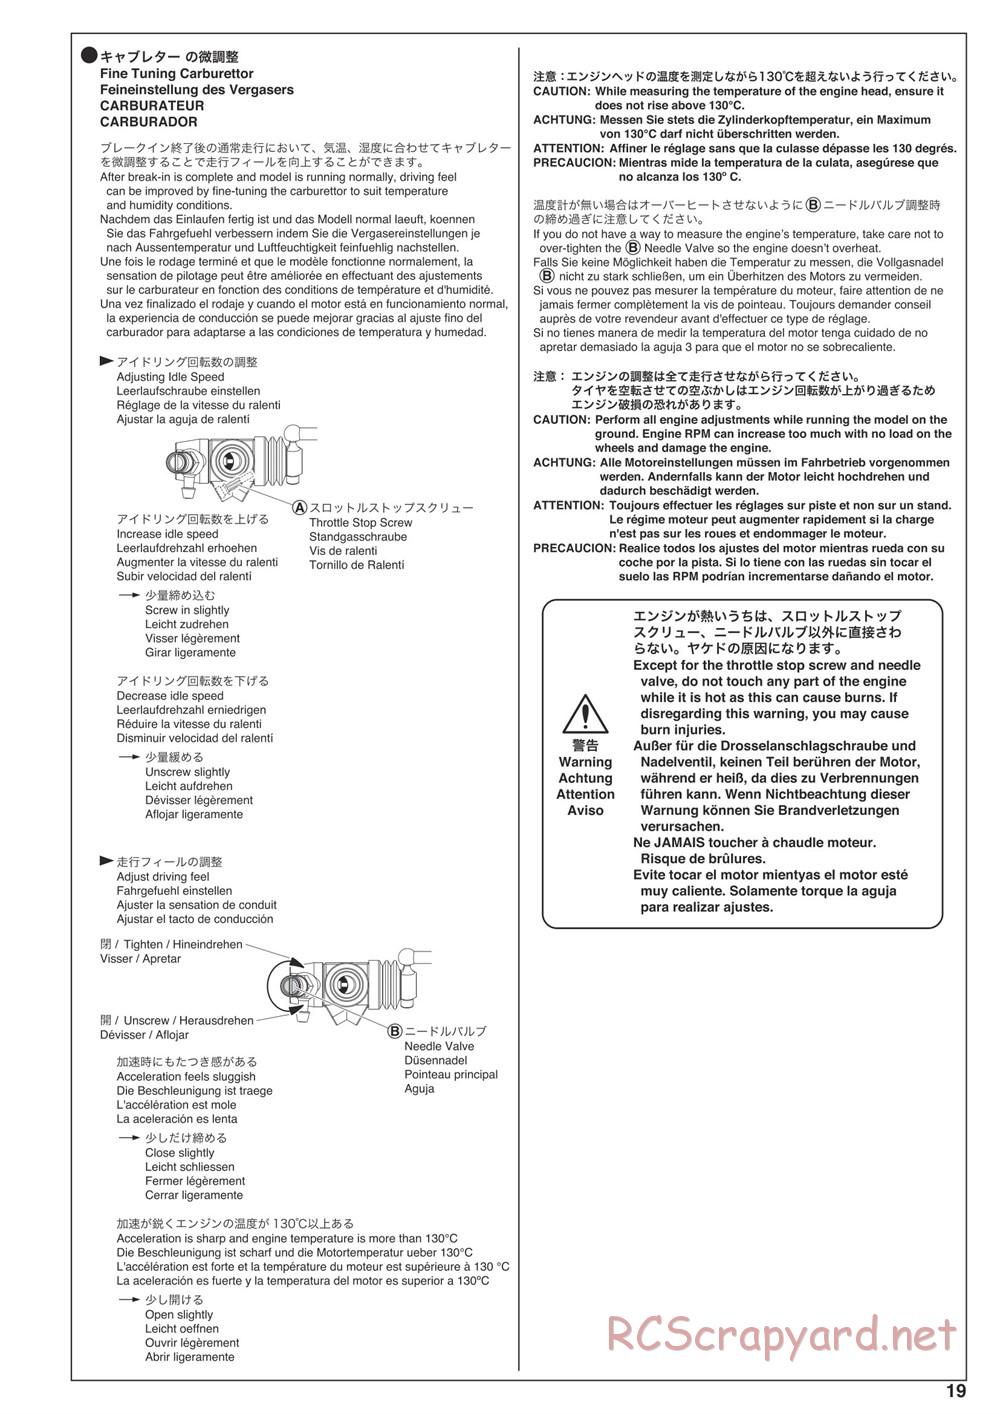 Kyosho - Nitro Tracker (2019) - Manual - Page 19